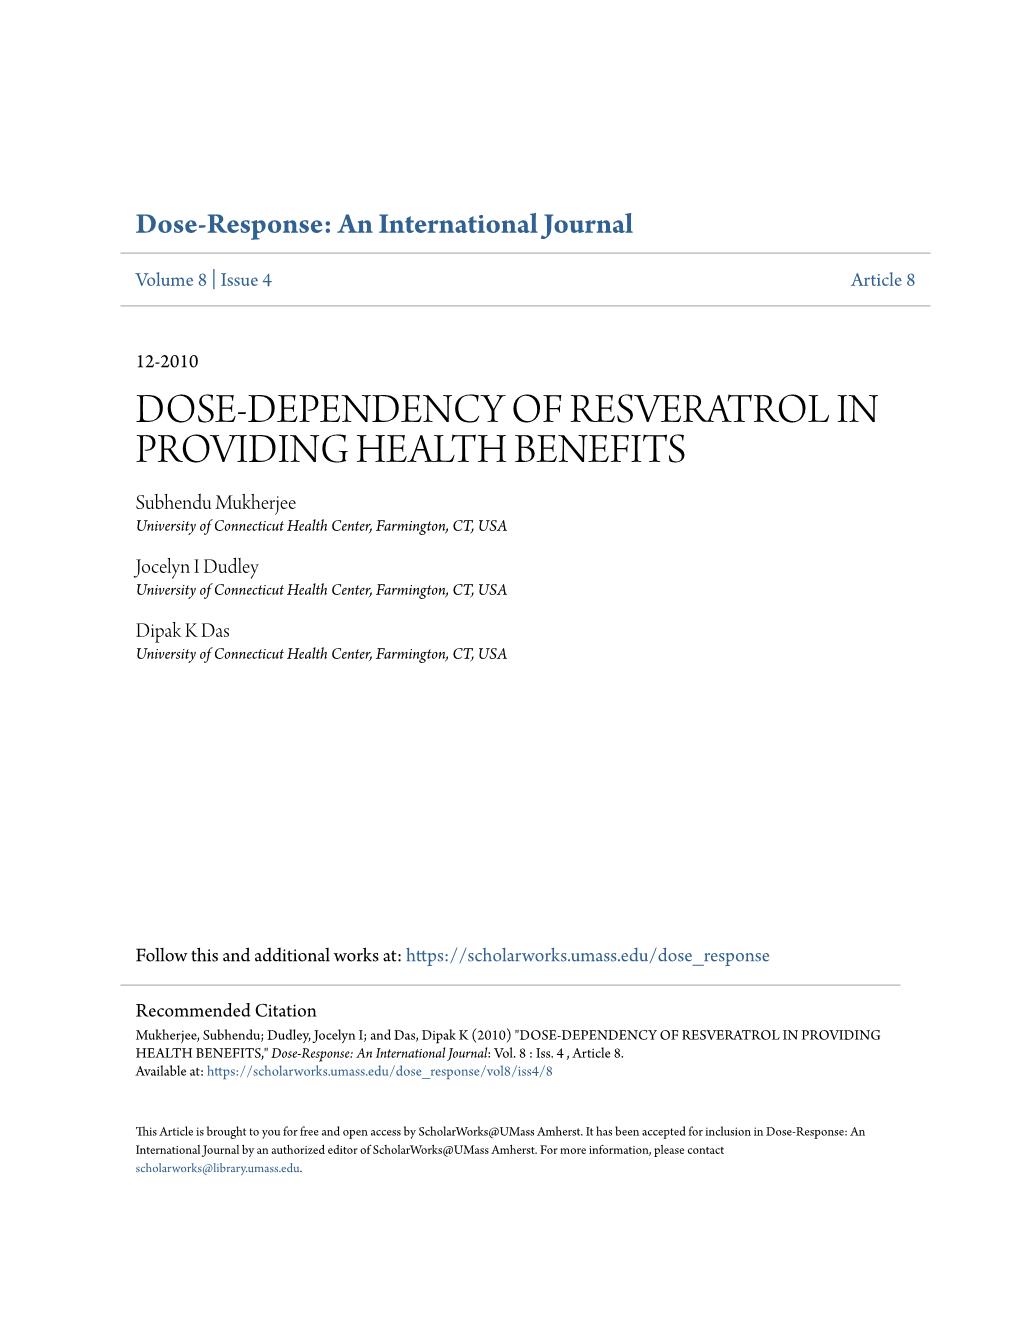 DOSE-DEPENDENCY of RESVERATROL in PROVIDING HEALTH BENEFITS Subhendu Mukherjee University of Connecticut Health Center, Farmington, CT, USA